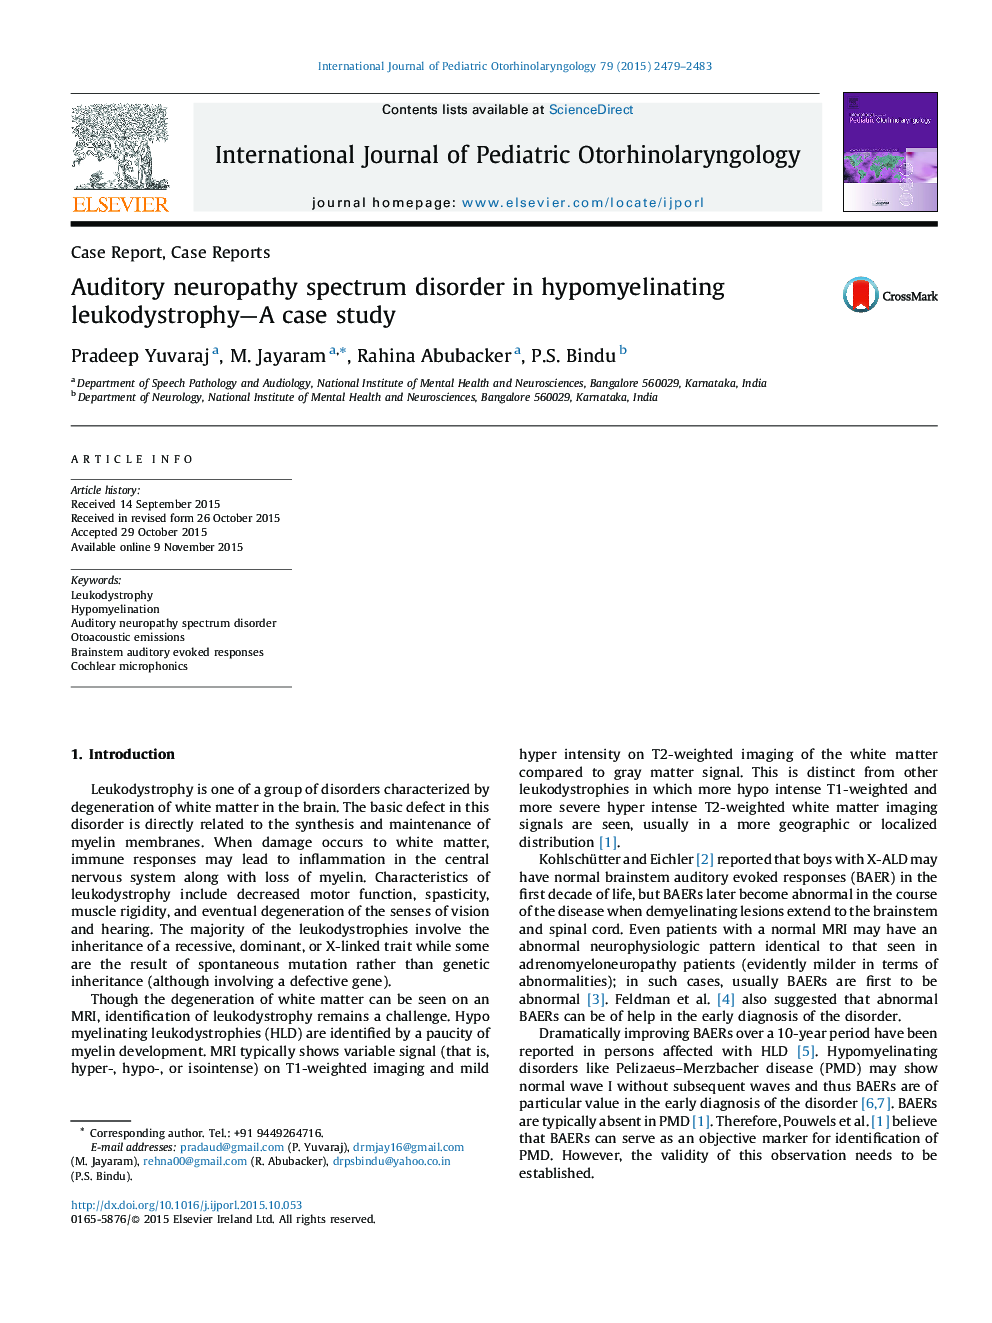 Auditory neuropathy spectrum disorder in hypomyelinating leukodystrophy-A case study